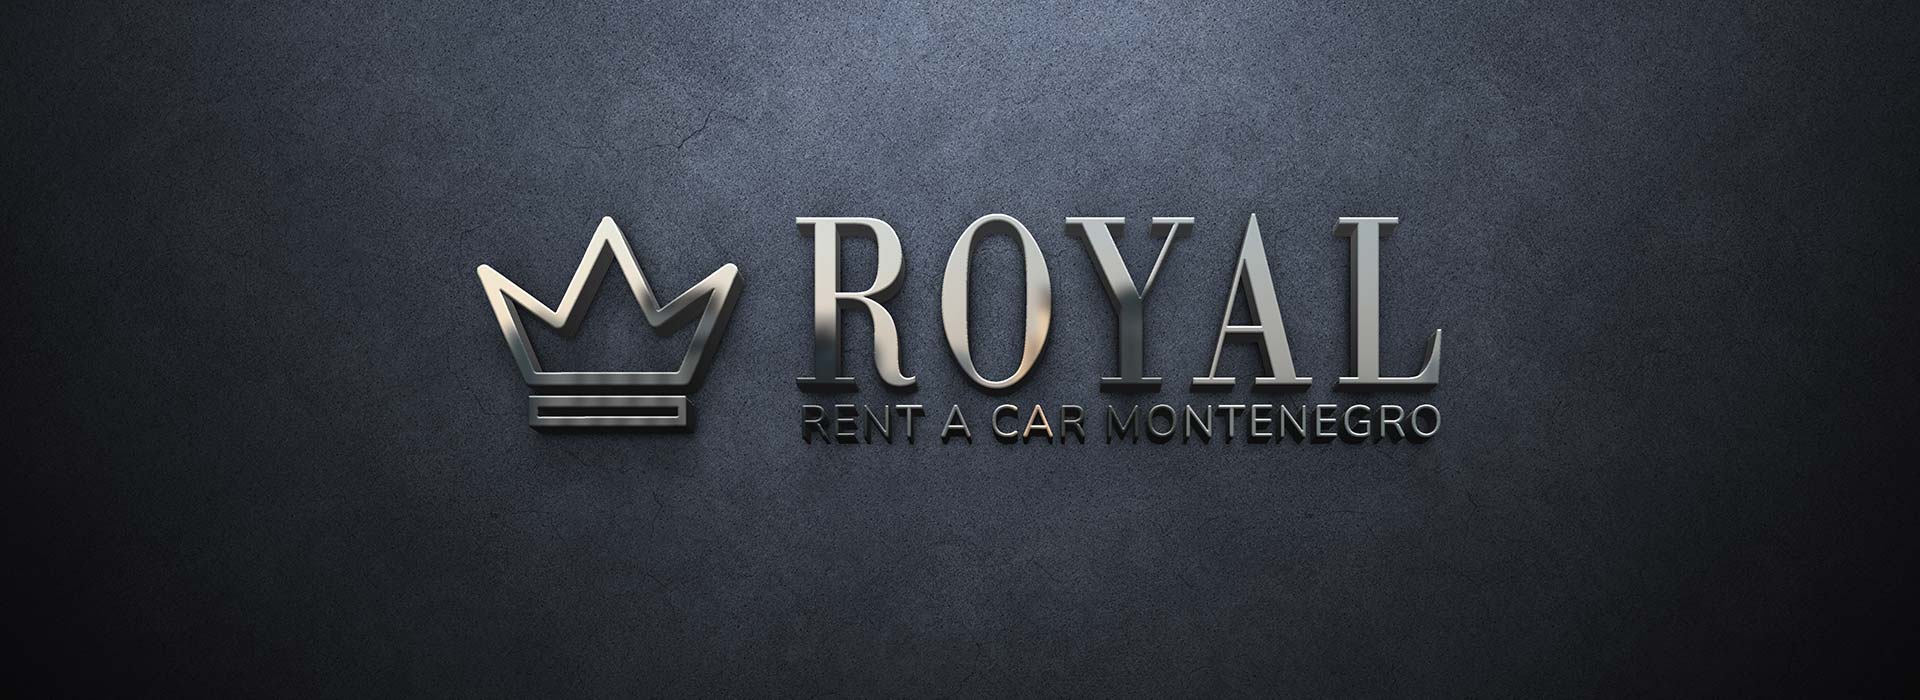 Rent a car Montenegro | About us